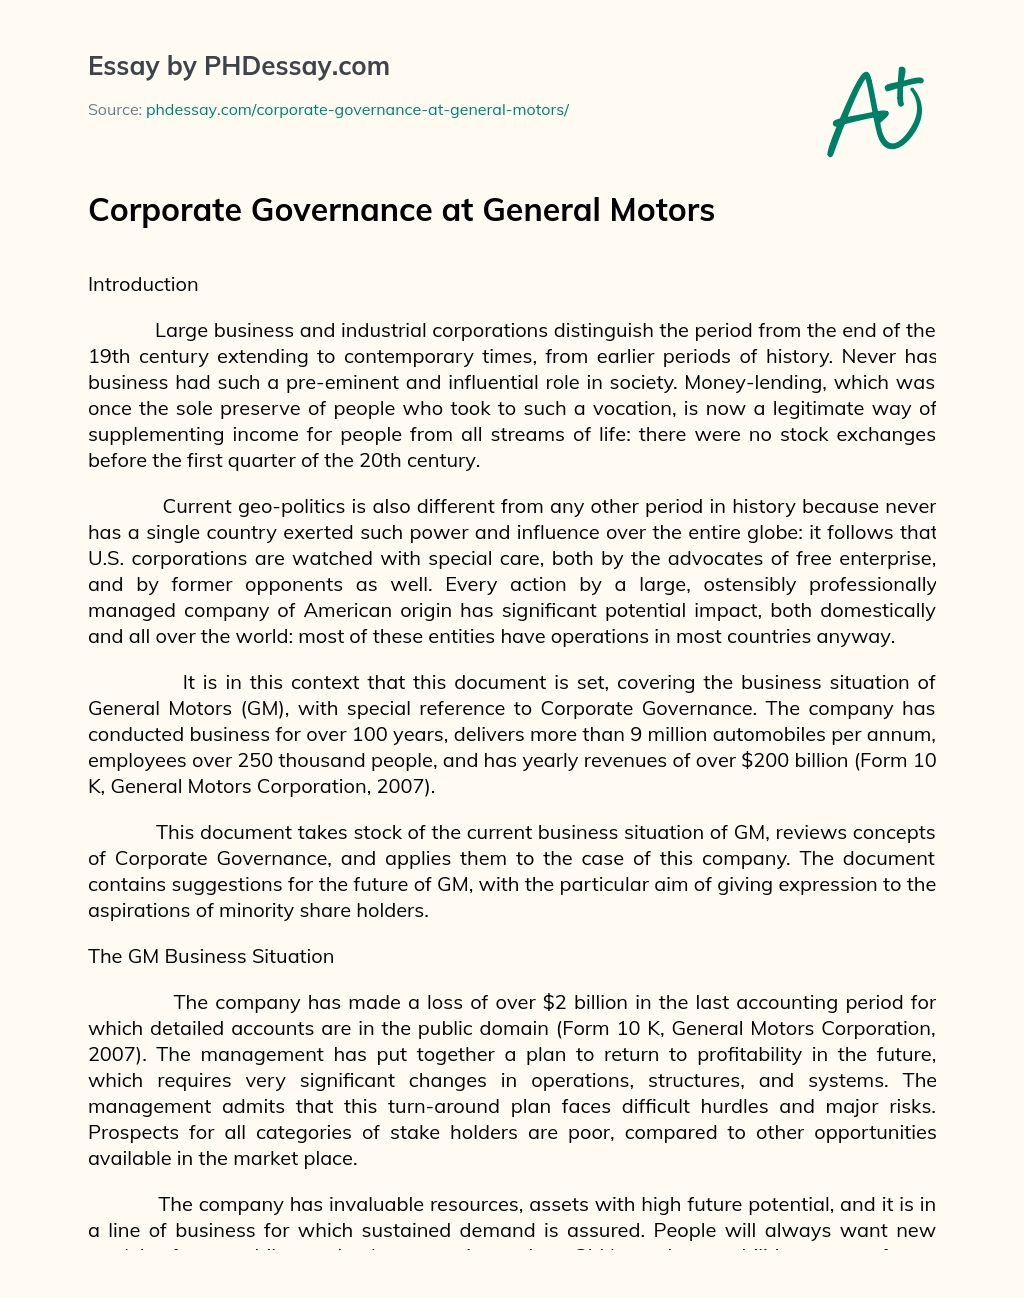 Corporate Governance at General Motors essay